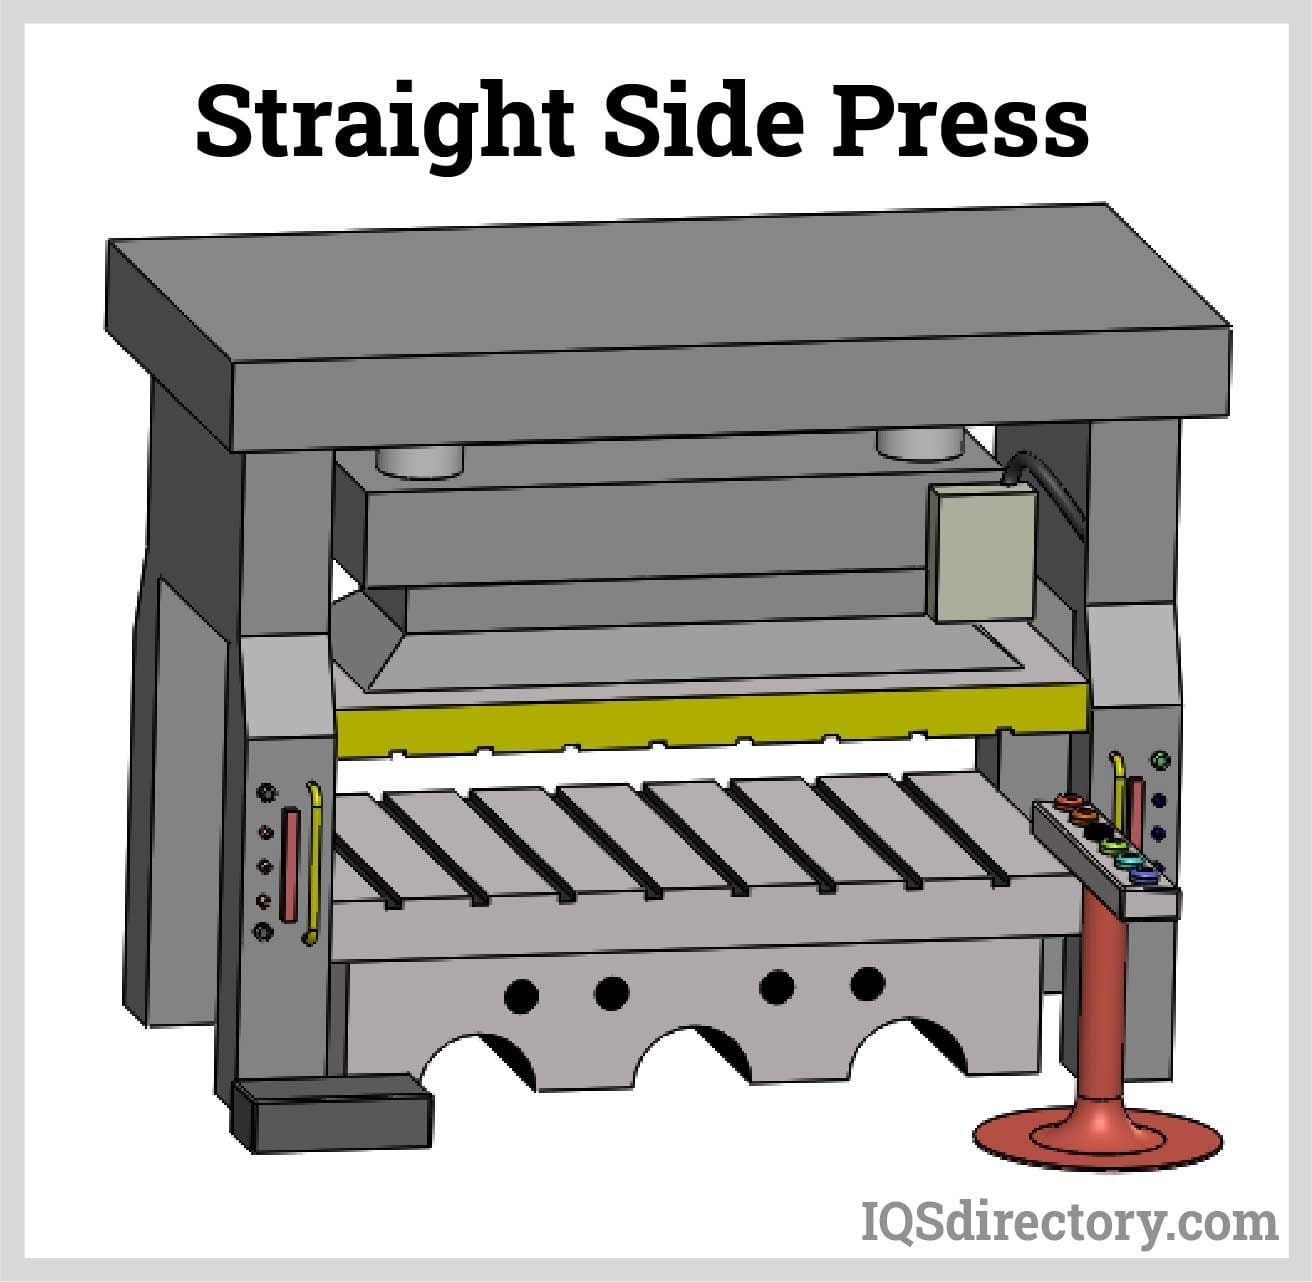 Straight Side Press